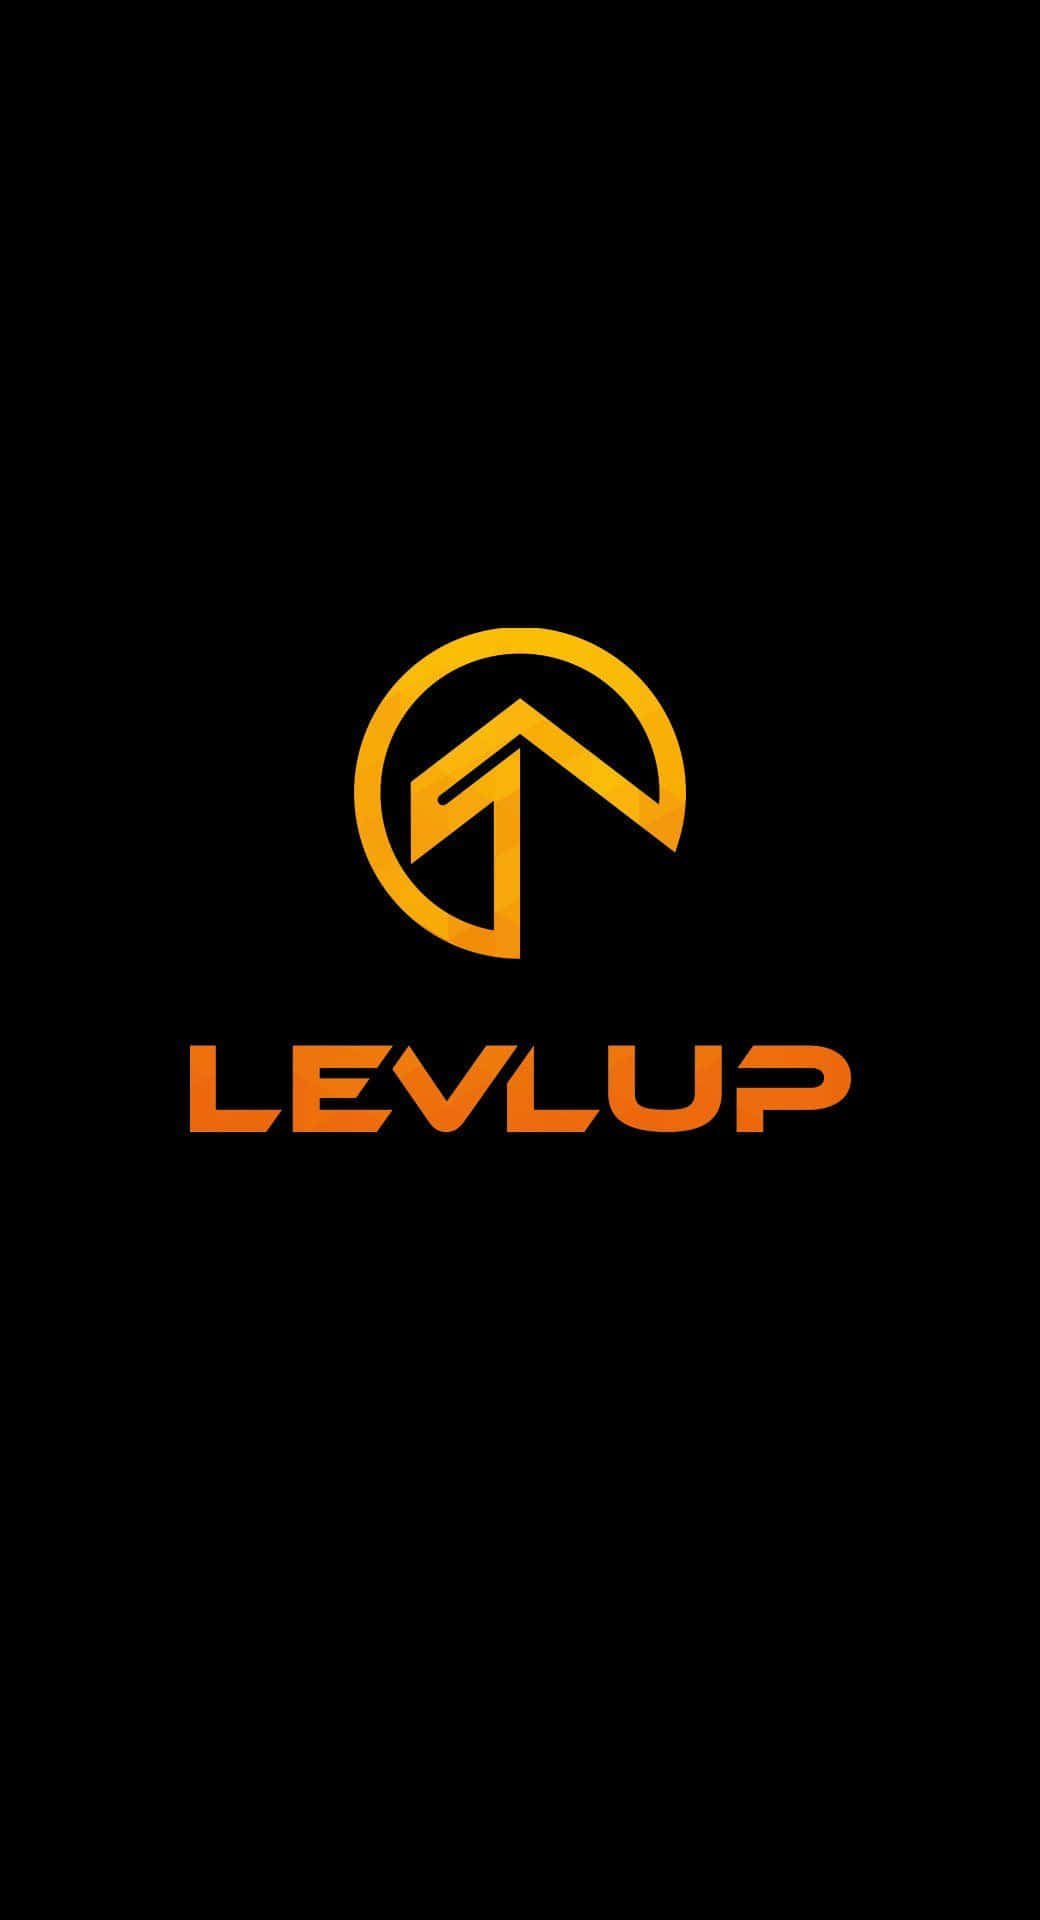 Premium Vector  Level up neon sign illustration